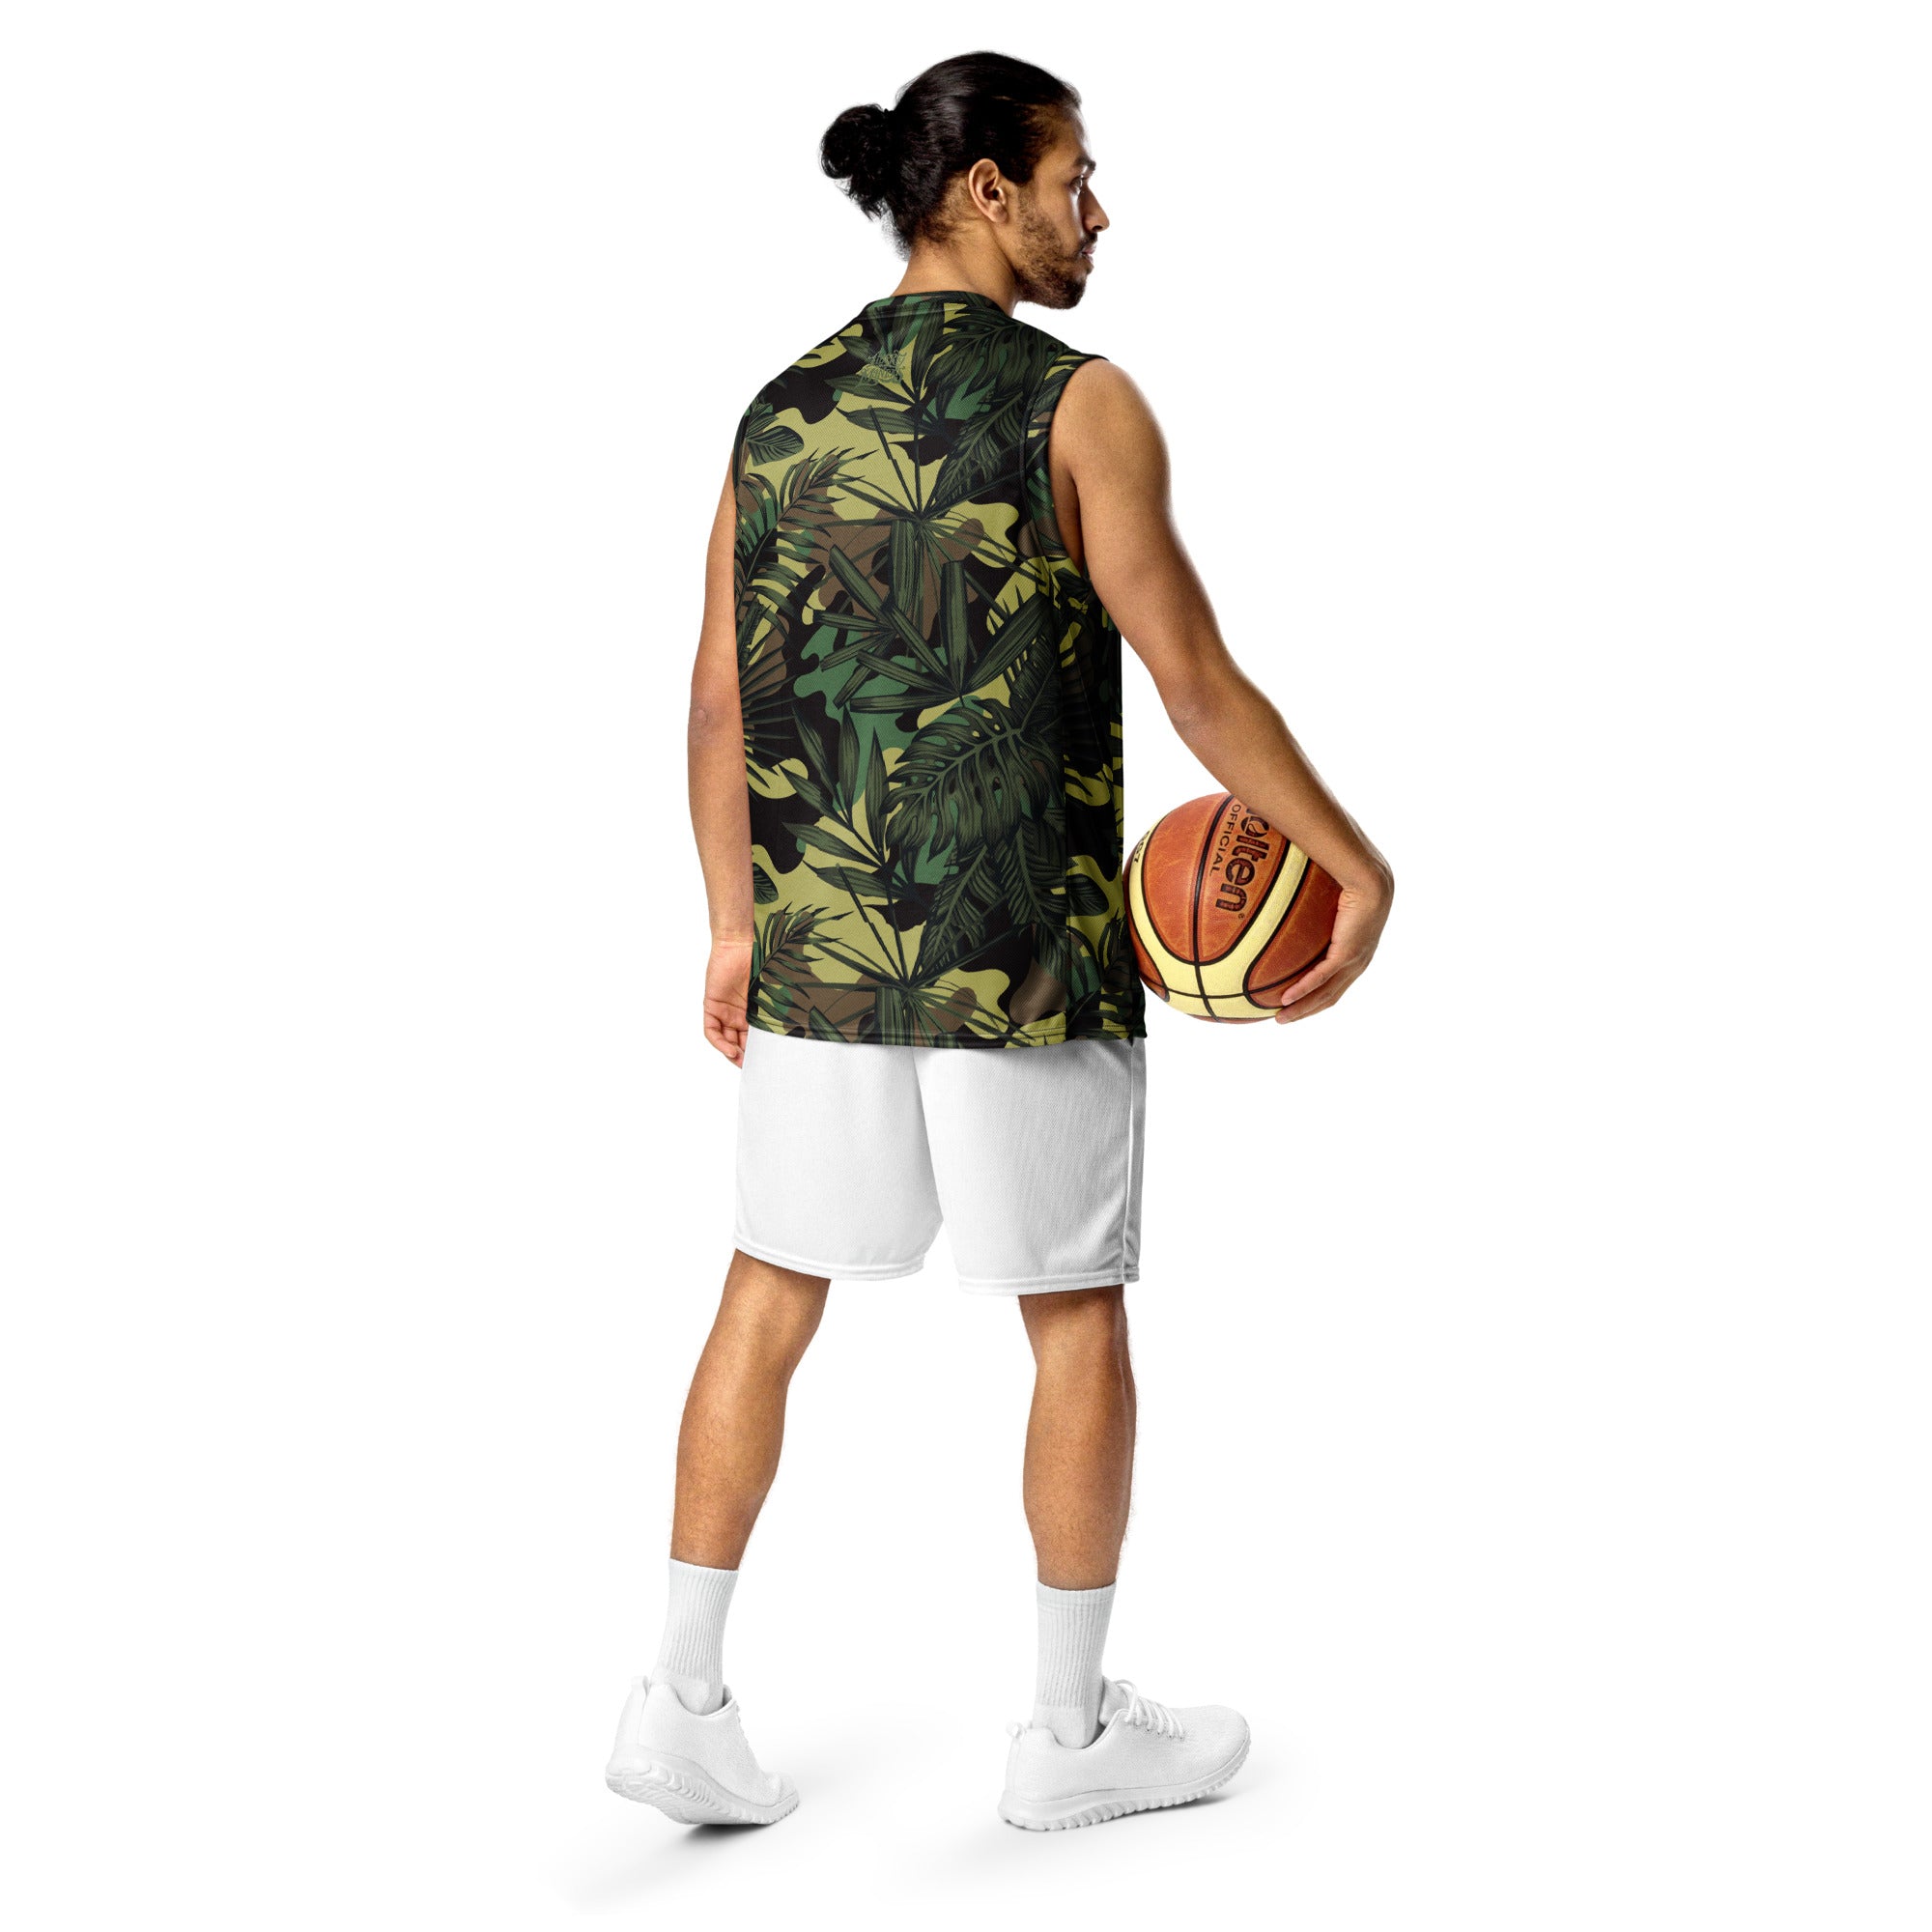 Tropicamo Commando Basketball Jersey